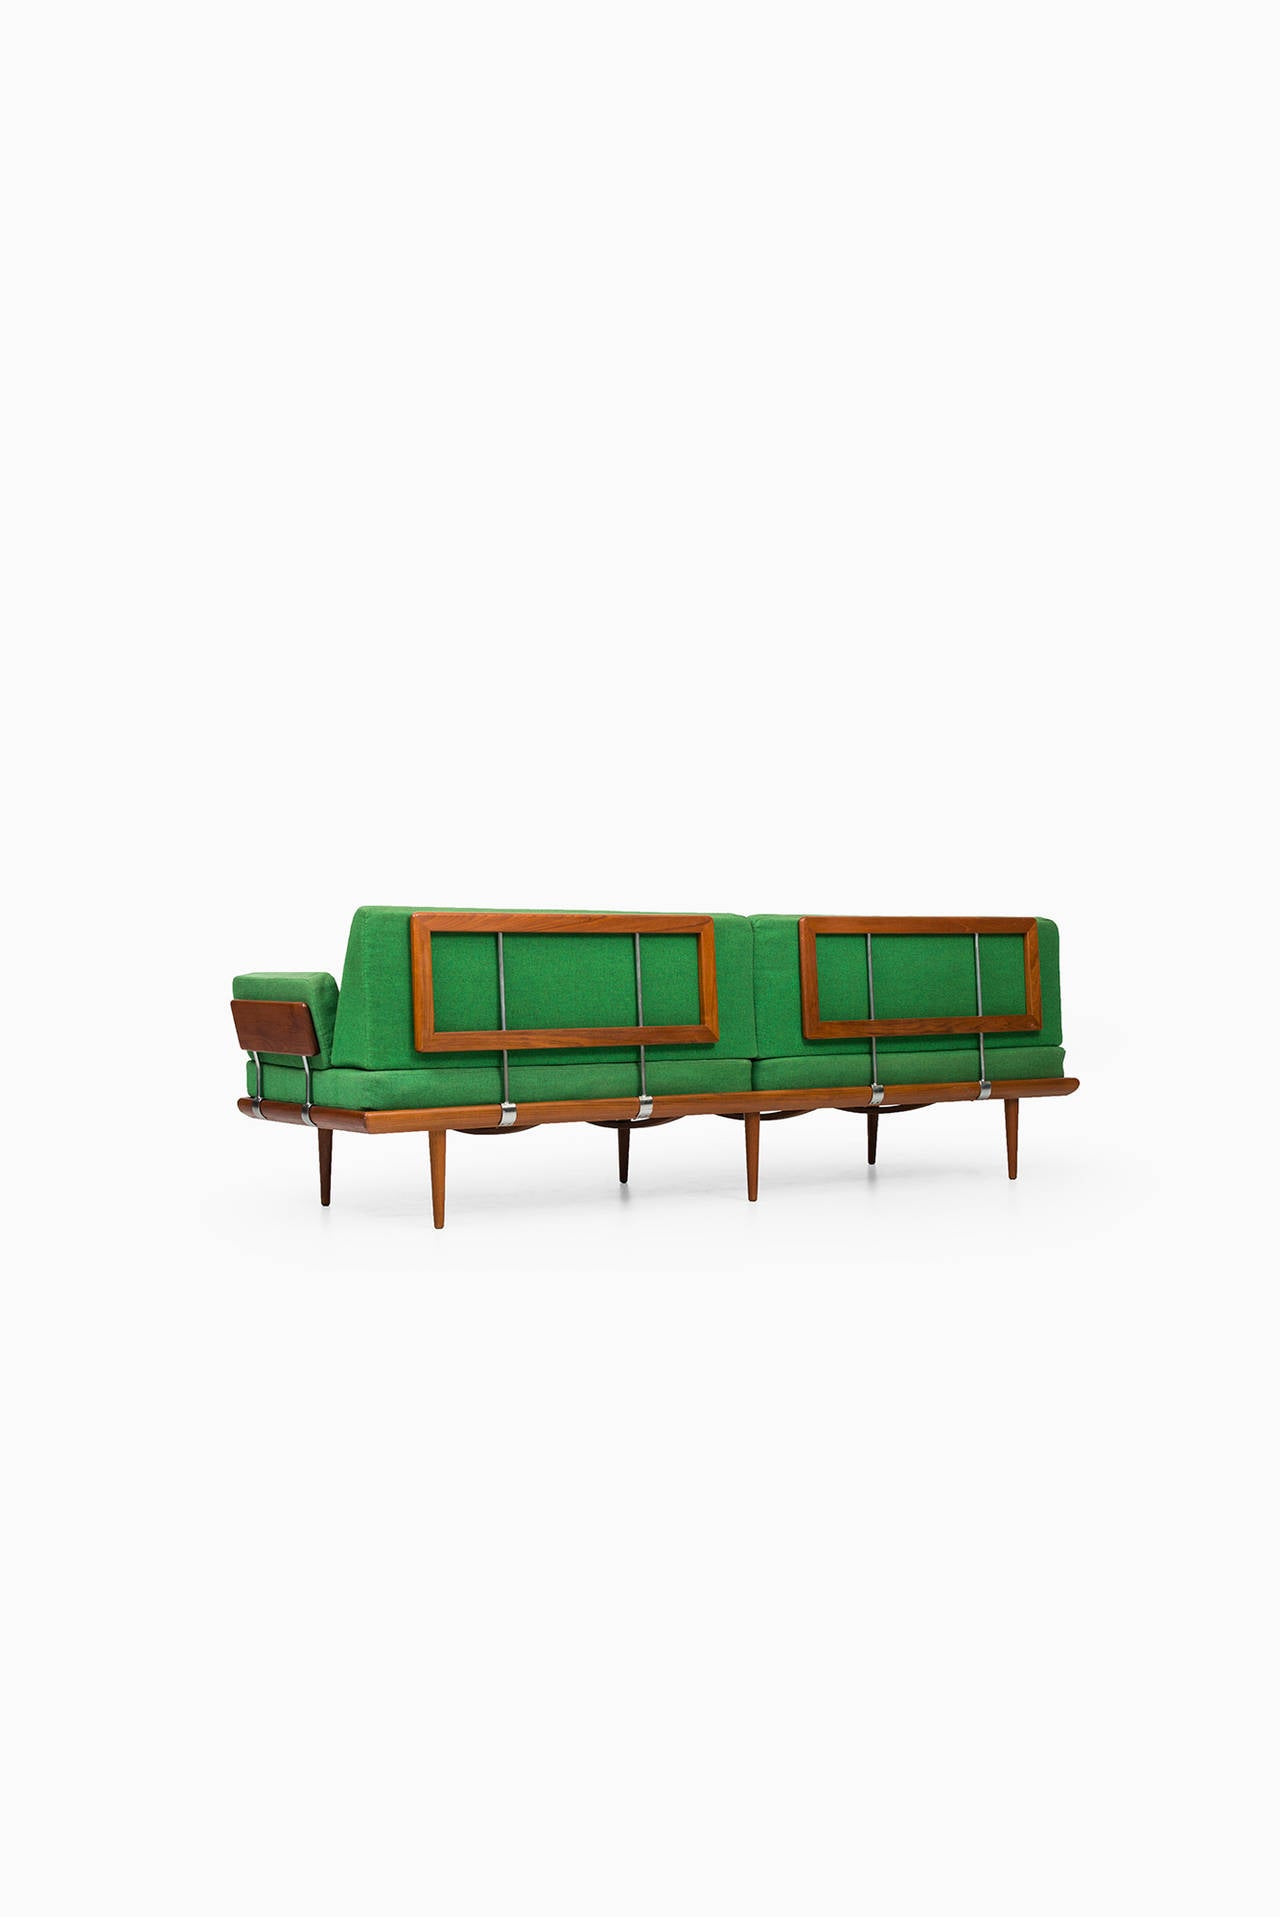 Rare long sofa model Minerva designed by Peter Hvidt & Orla Mølgaard-Nielsen. Produced by France & Son in Denmark.